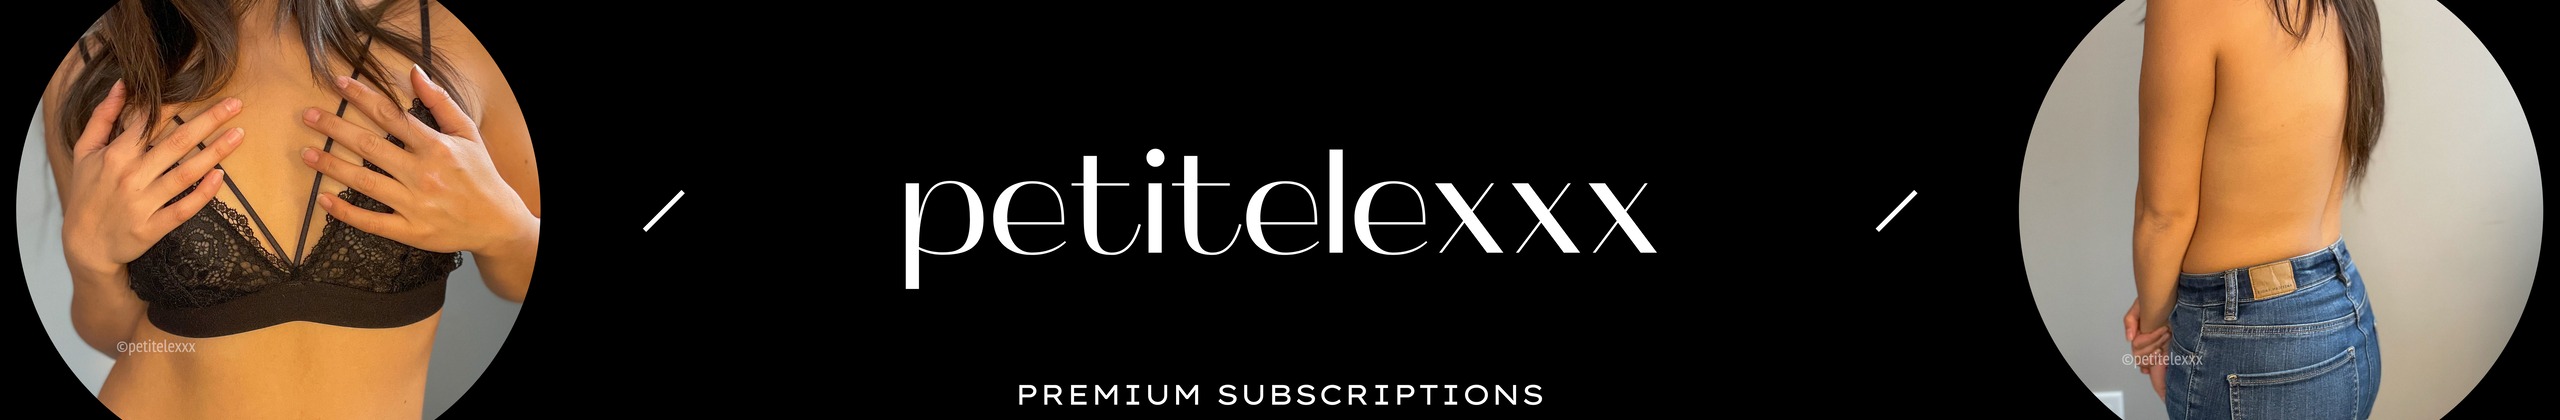 petitelexxx - profile image